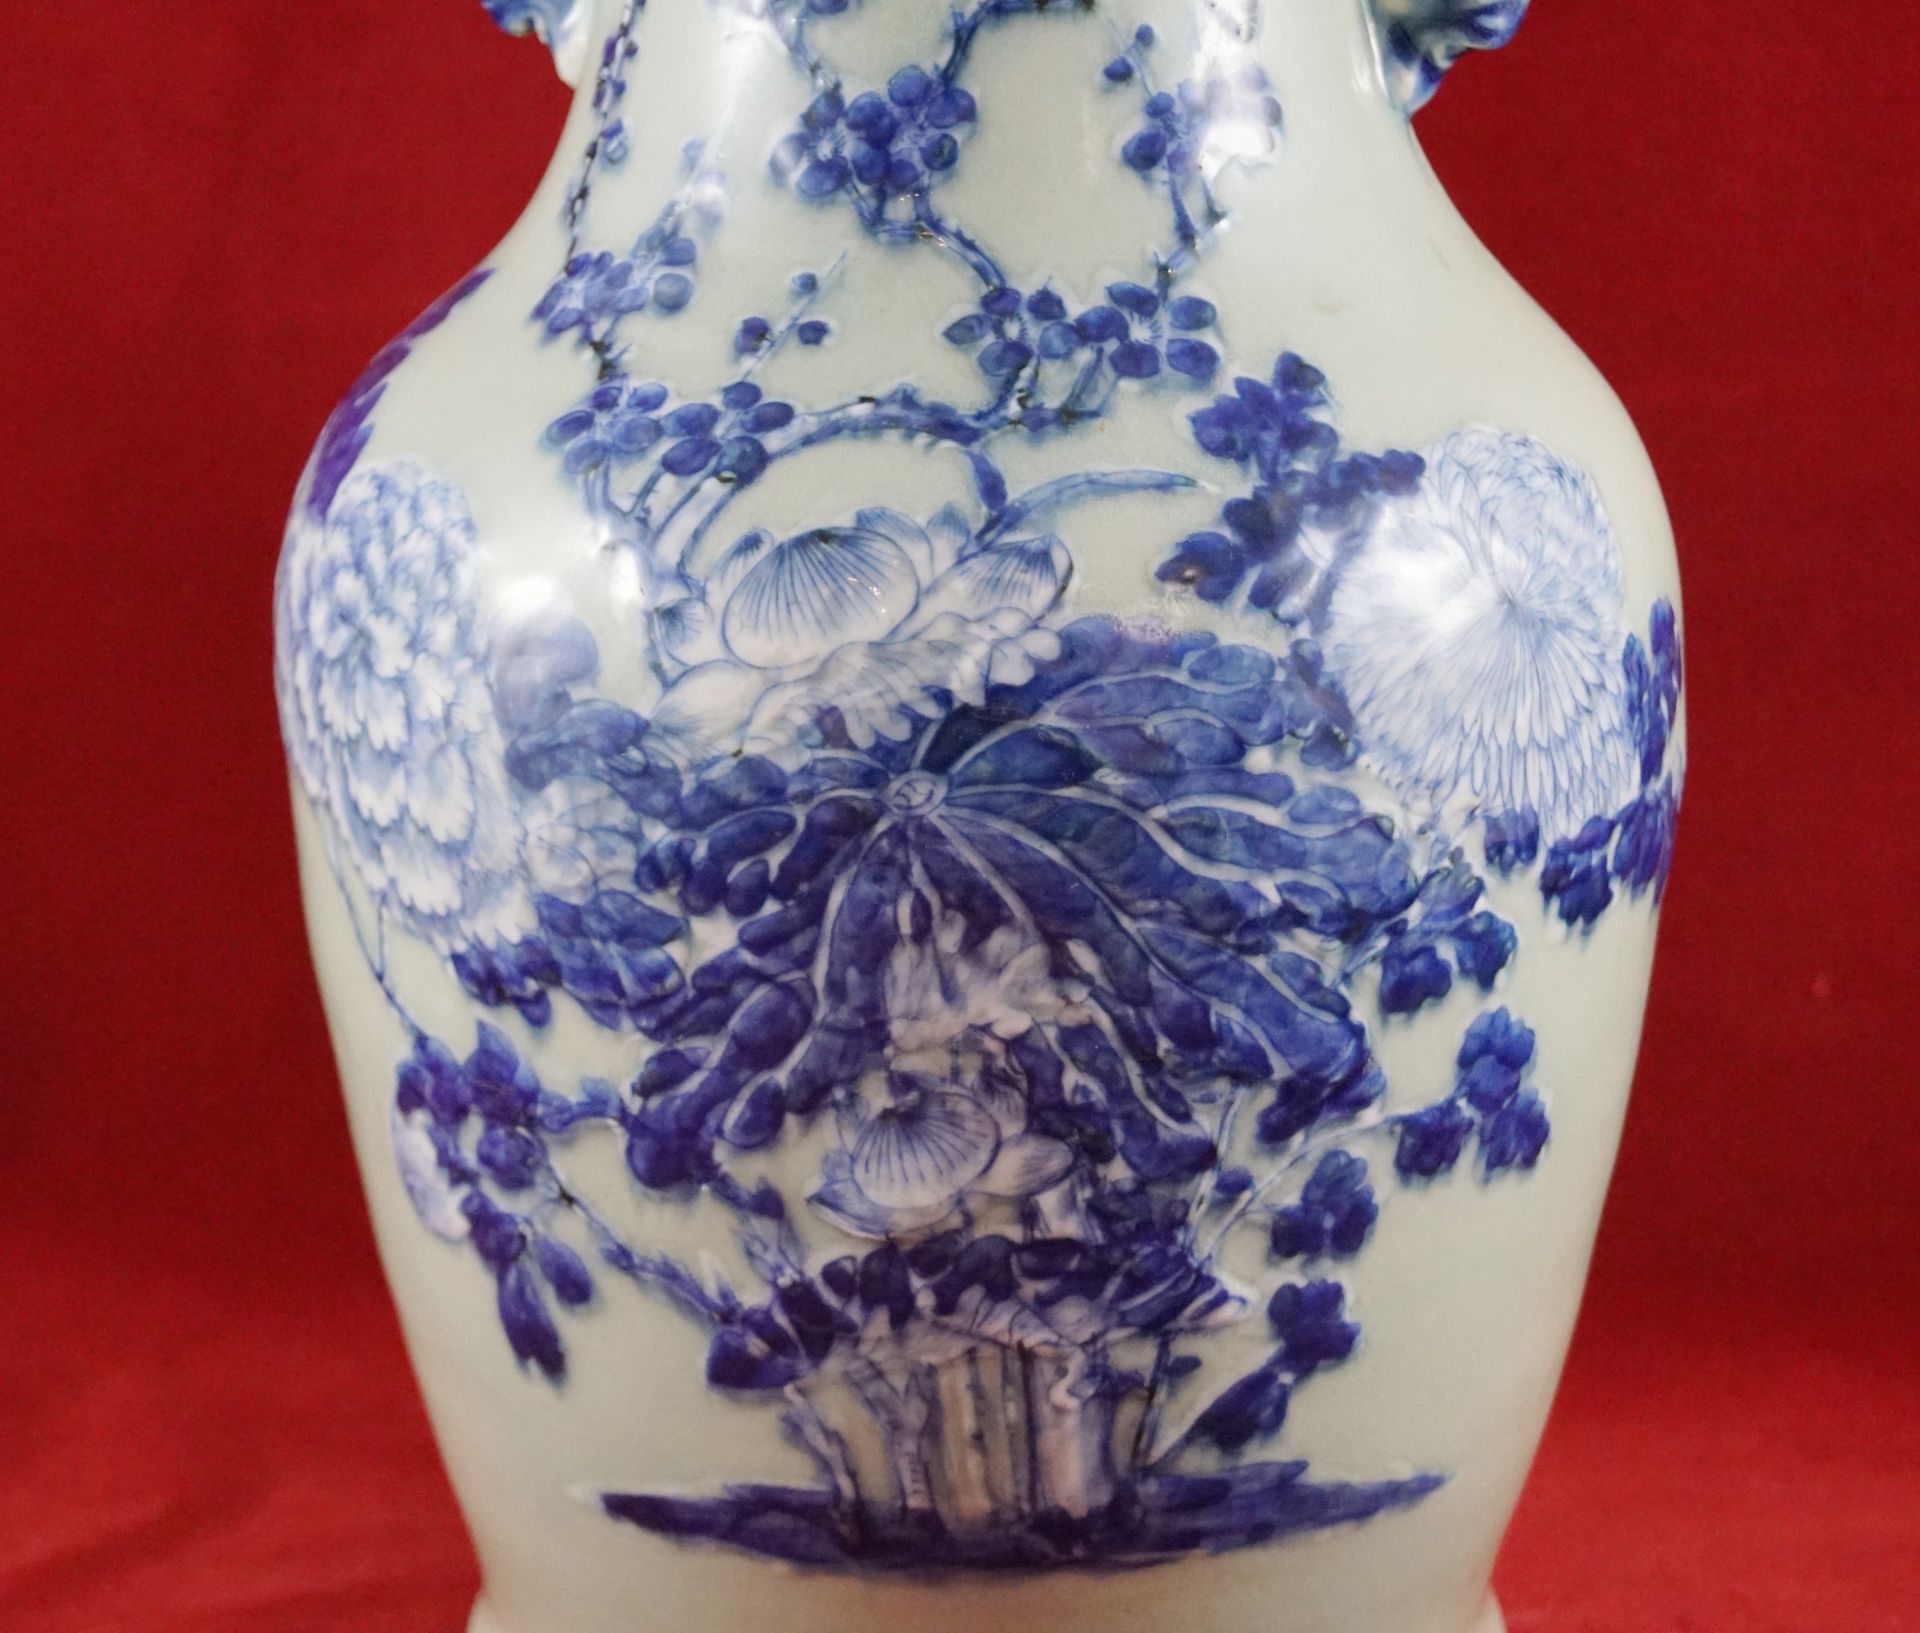 Rouleau Vase, China Porzellan, seladonfarben mit blauen erhabenen Blumenmotiven, 19. Jhrd, Höhe 33,5 - Image 2 of 3